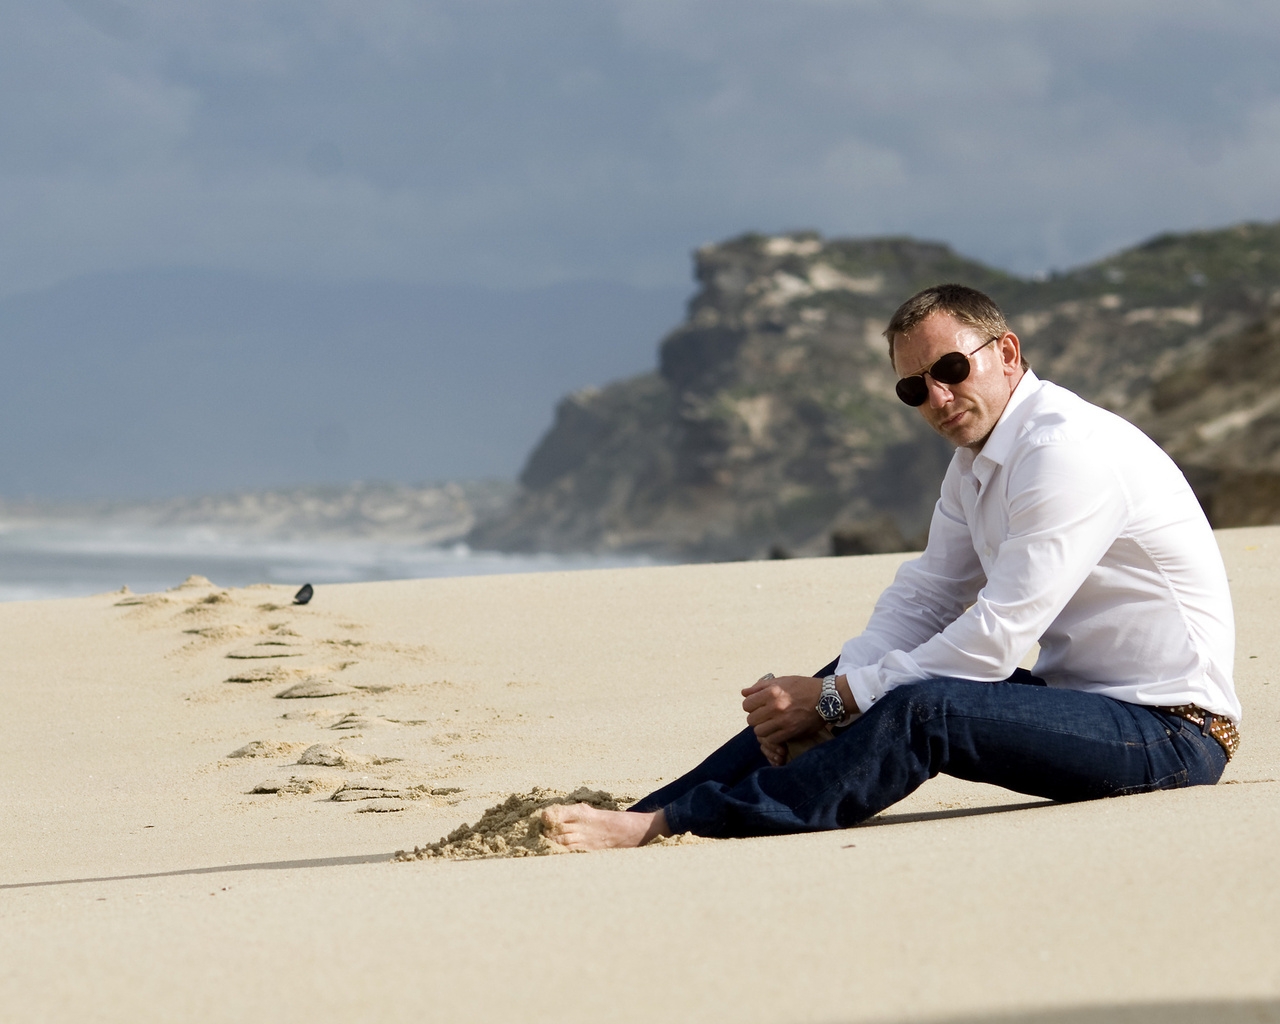 Daniel Craig on the Beach for 1280 x 1024 resolution